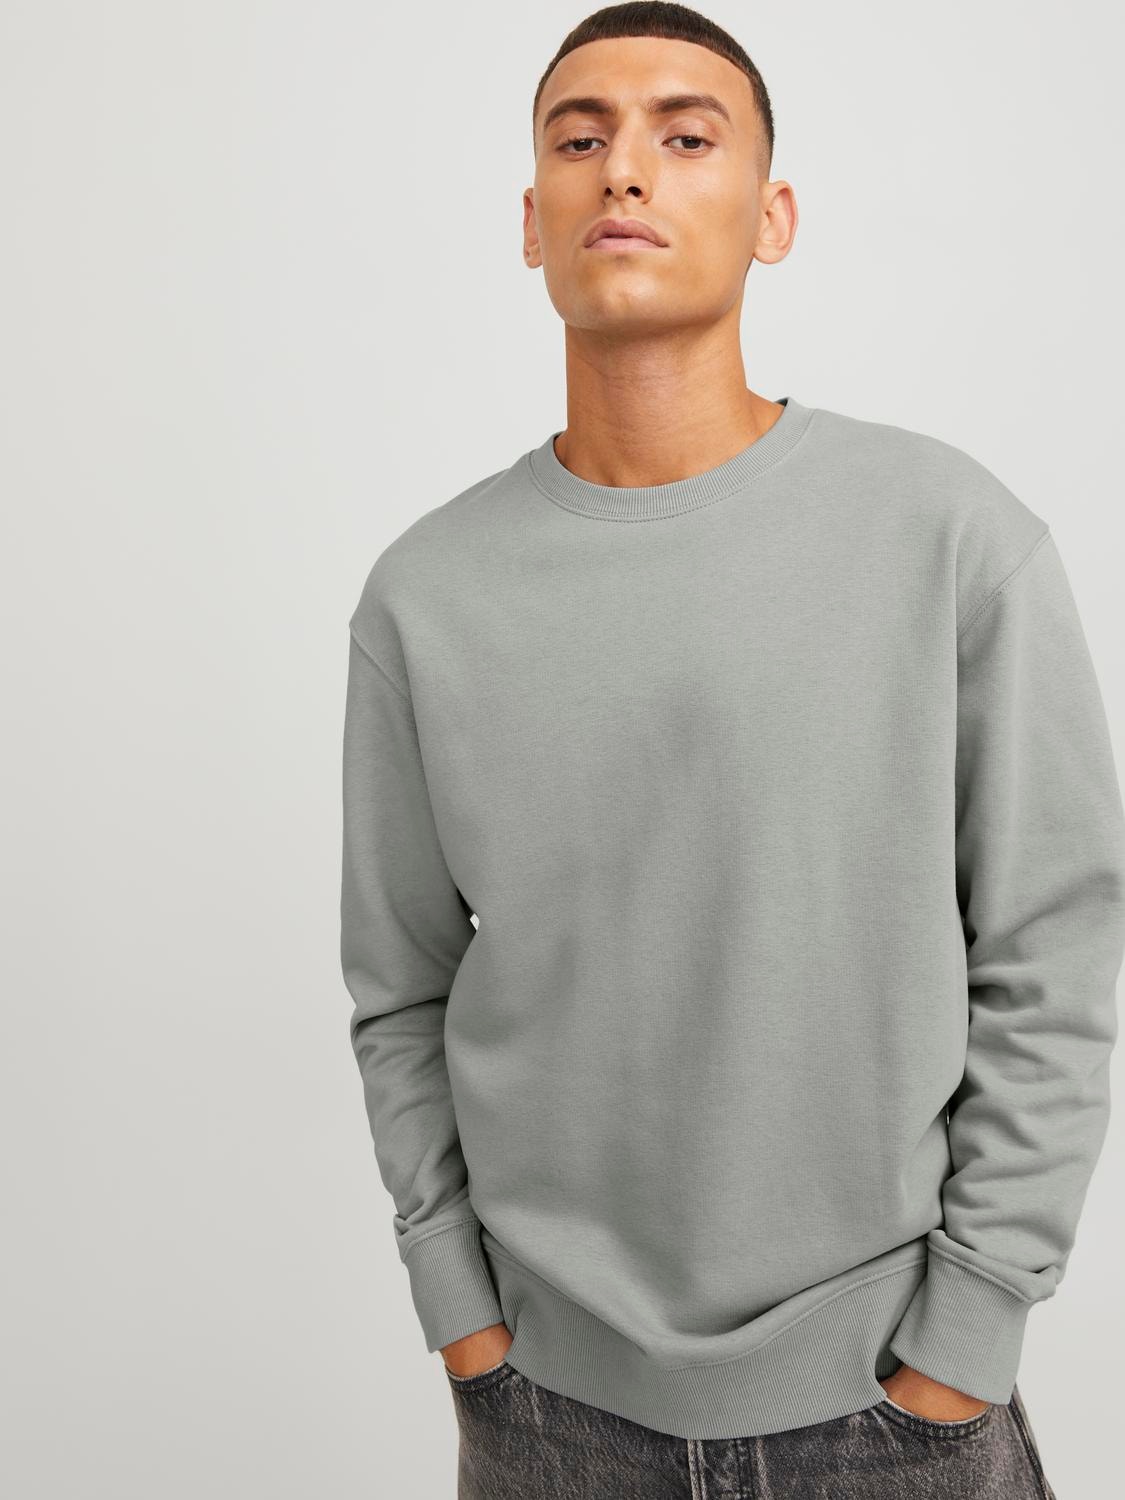 Jack & Jones Plain Crewn Neck Sweatshirt -Ultimate Grey - 12208182